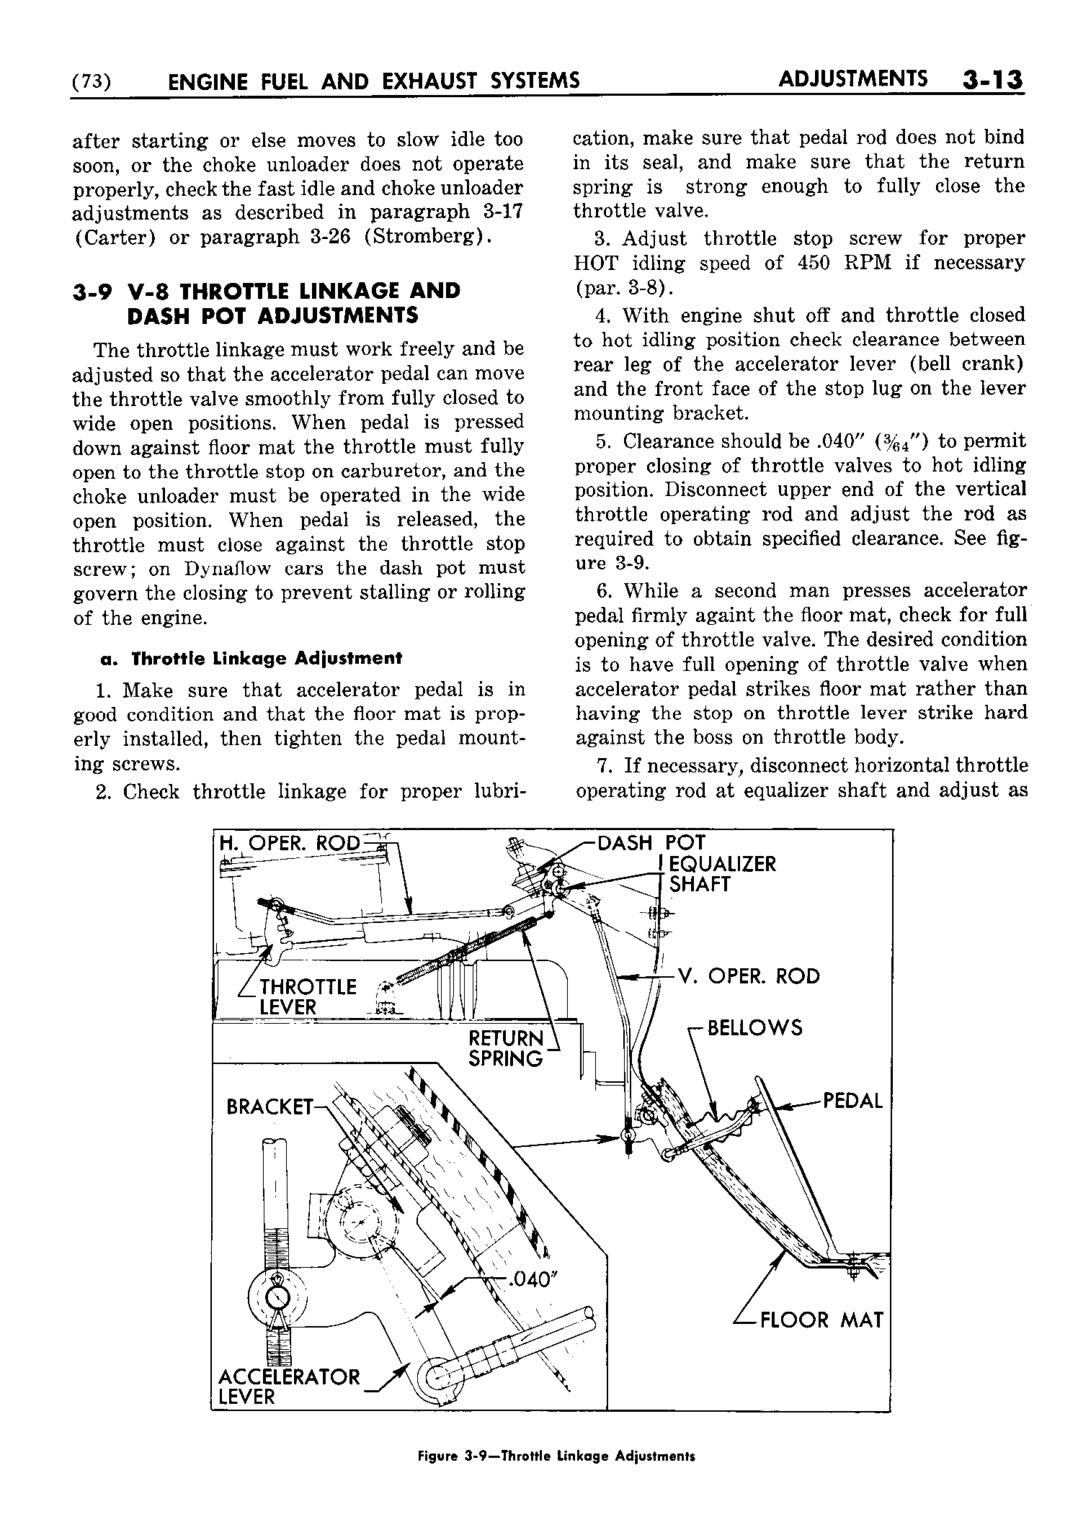 n_04 1953 Buick Shop Manual - Engine Fuel & Exhaust-013-013.jpg